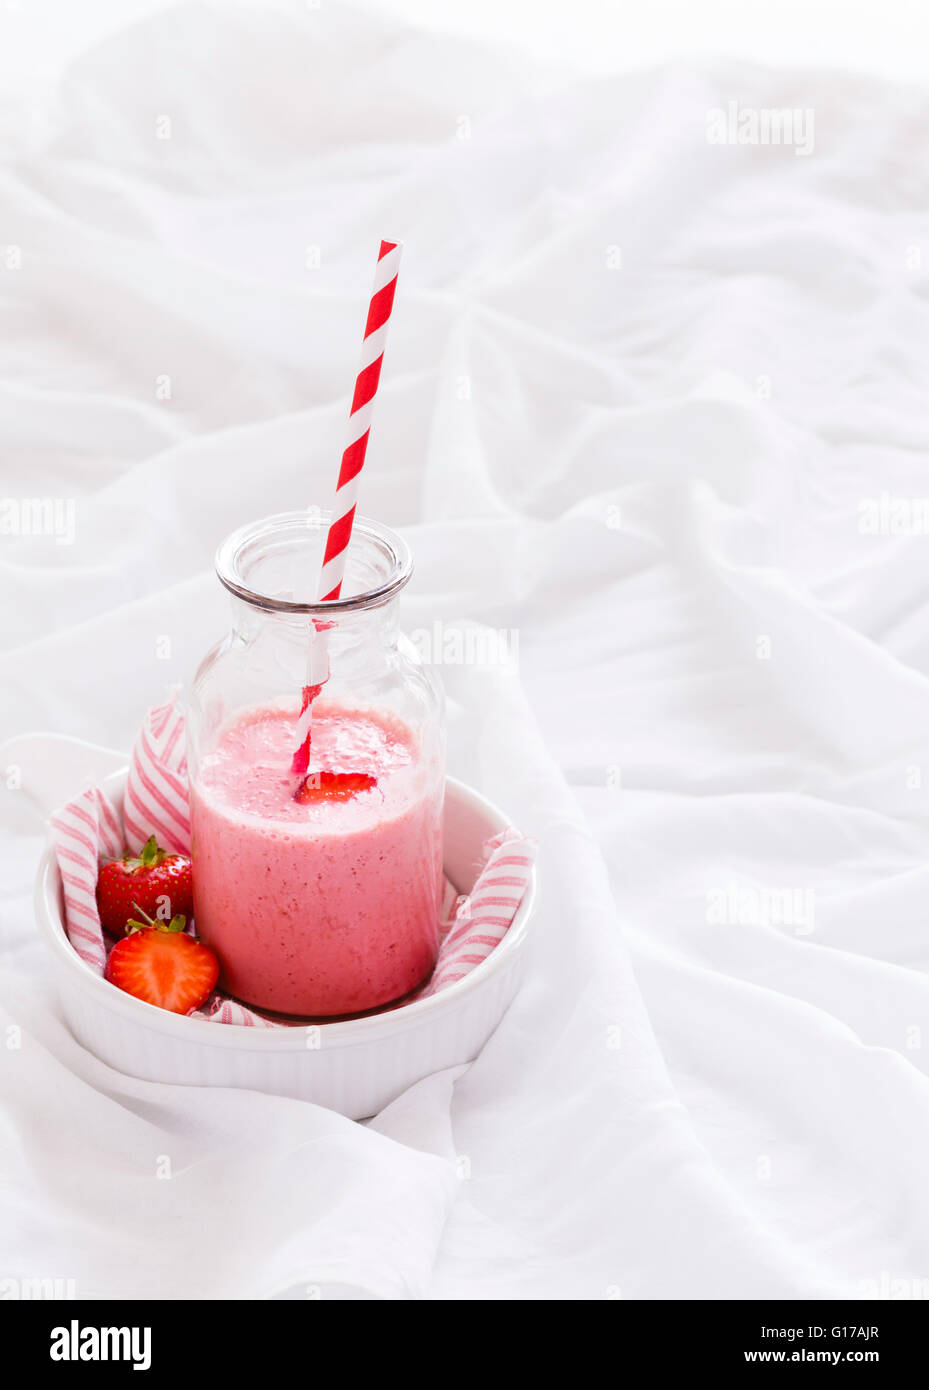 StrawberrySmoothie in a Milk Bottle Stock Photo